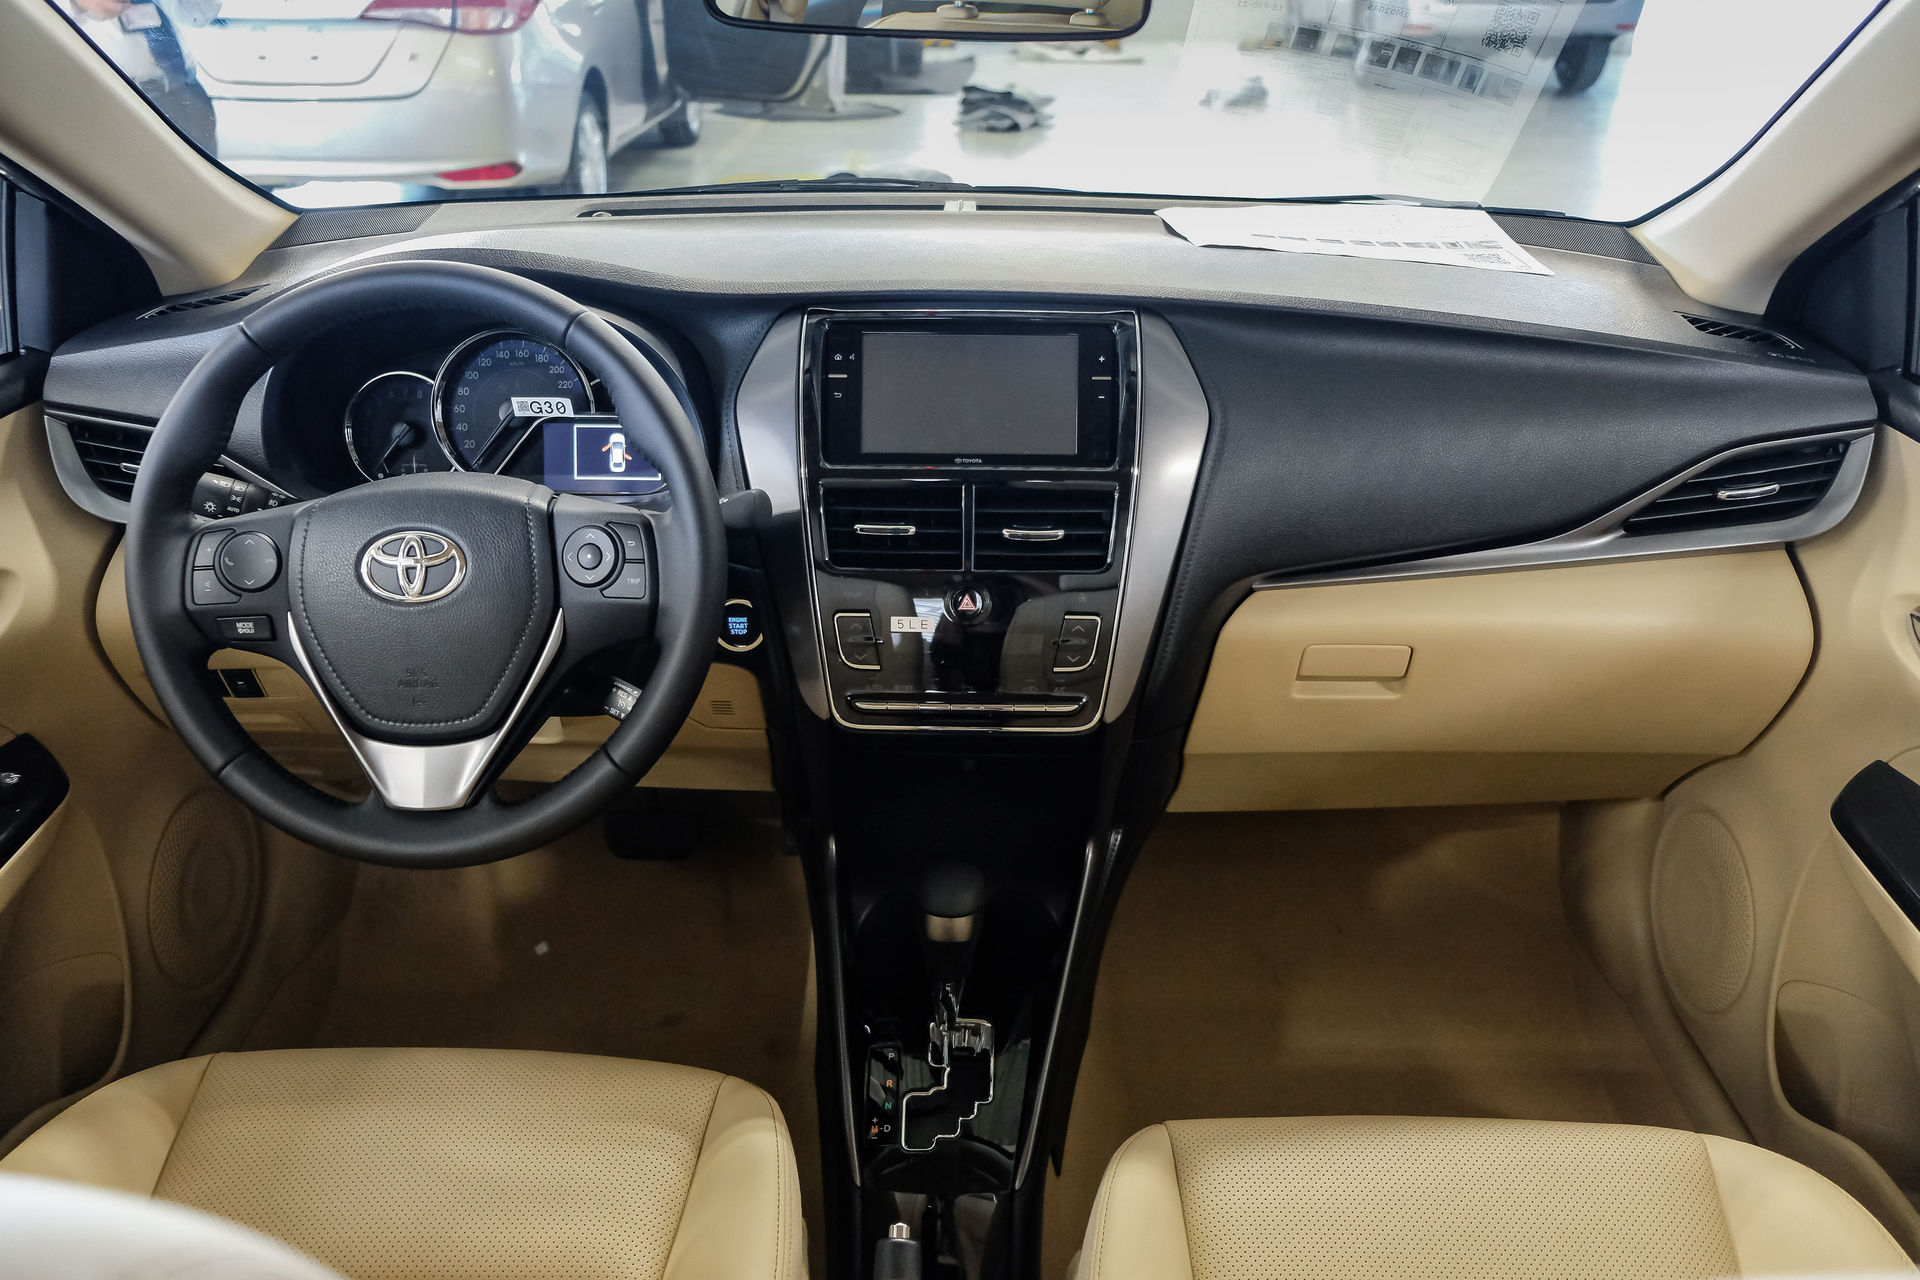 So sanh Toyota Vios G CVT va Hyundai Accent 1.4 AT Dac biet anh 6